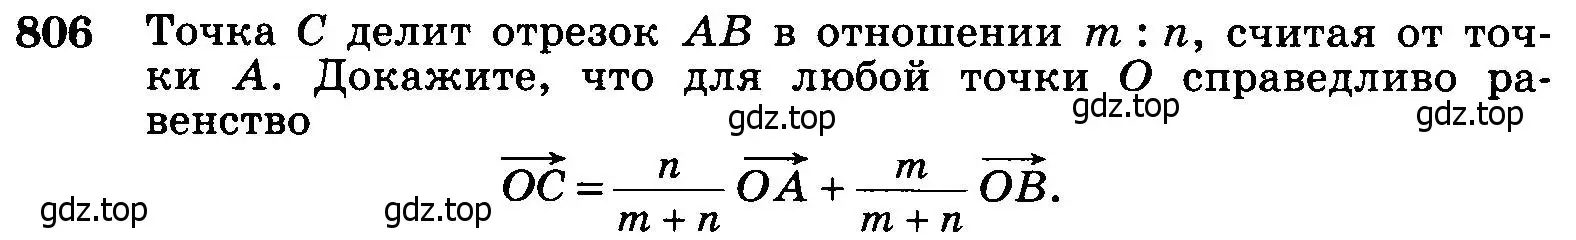 Условие номер 806 (страница 210) гдз по геометрии 7-9 класс Атанасян, Бутузов, учебник